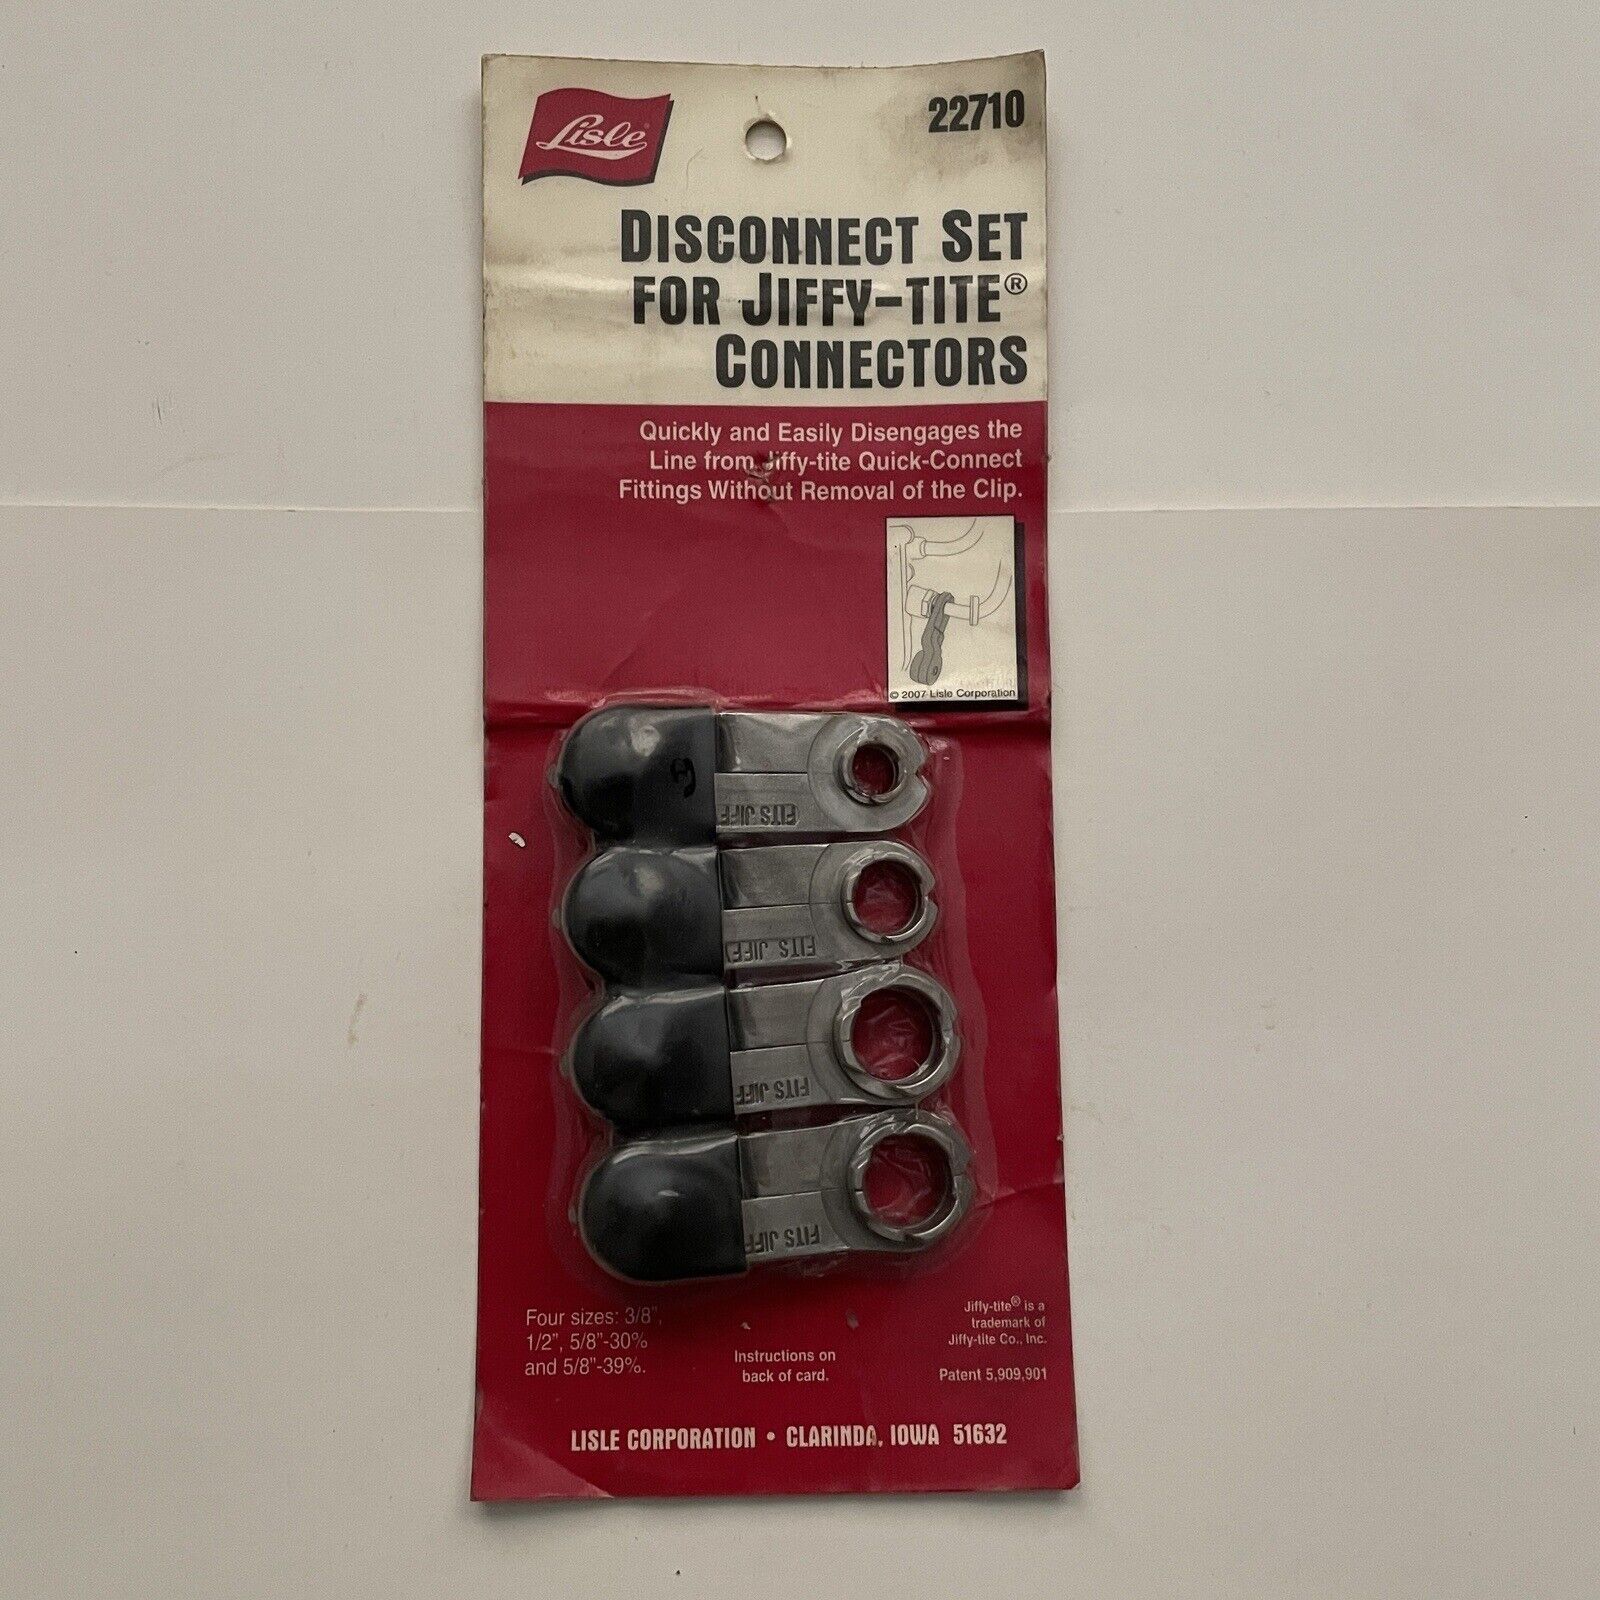 LISLE 22710 Disconnect Set for Jiffy-Tite Connectors